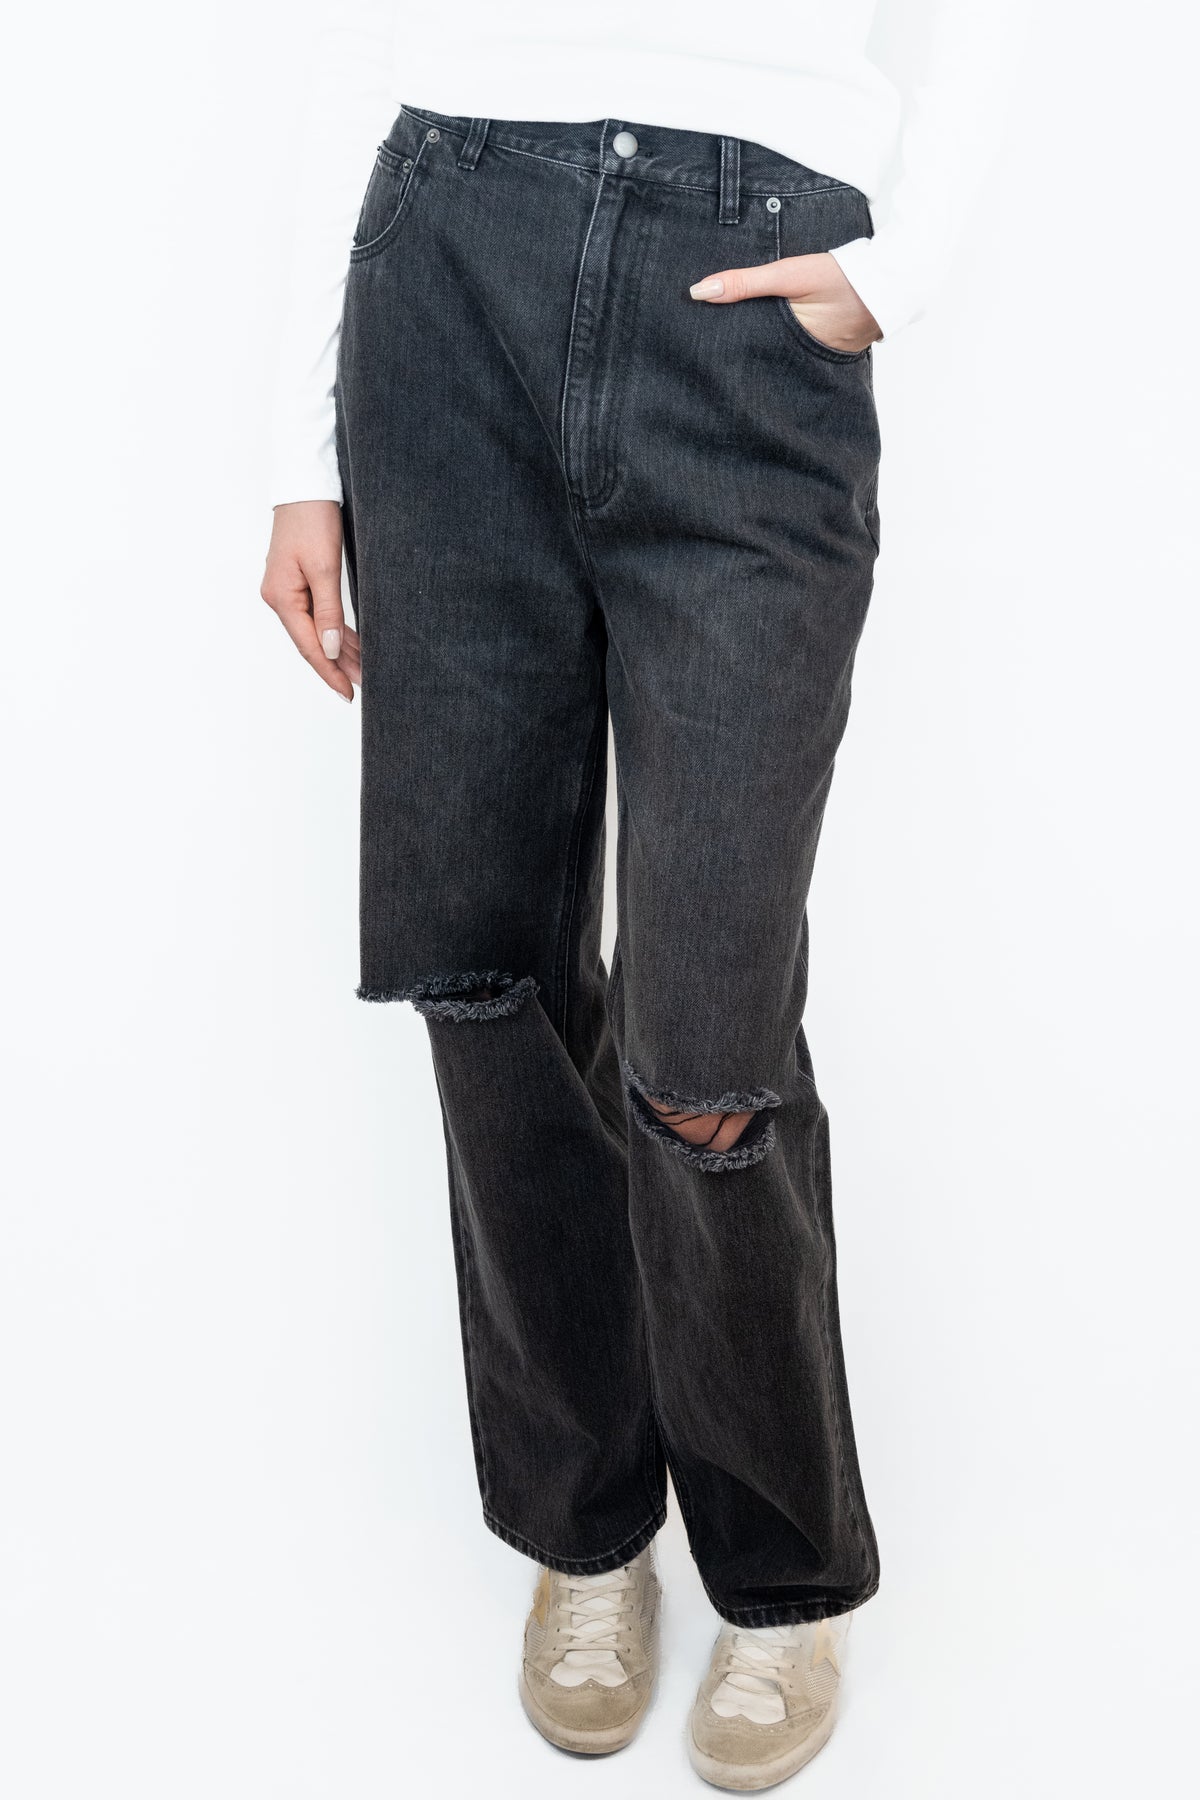 Tibi Vintage Wash Denim Ryder Jeans schwarz